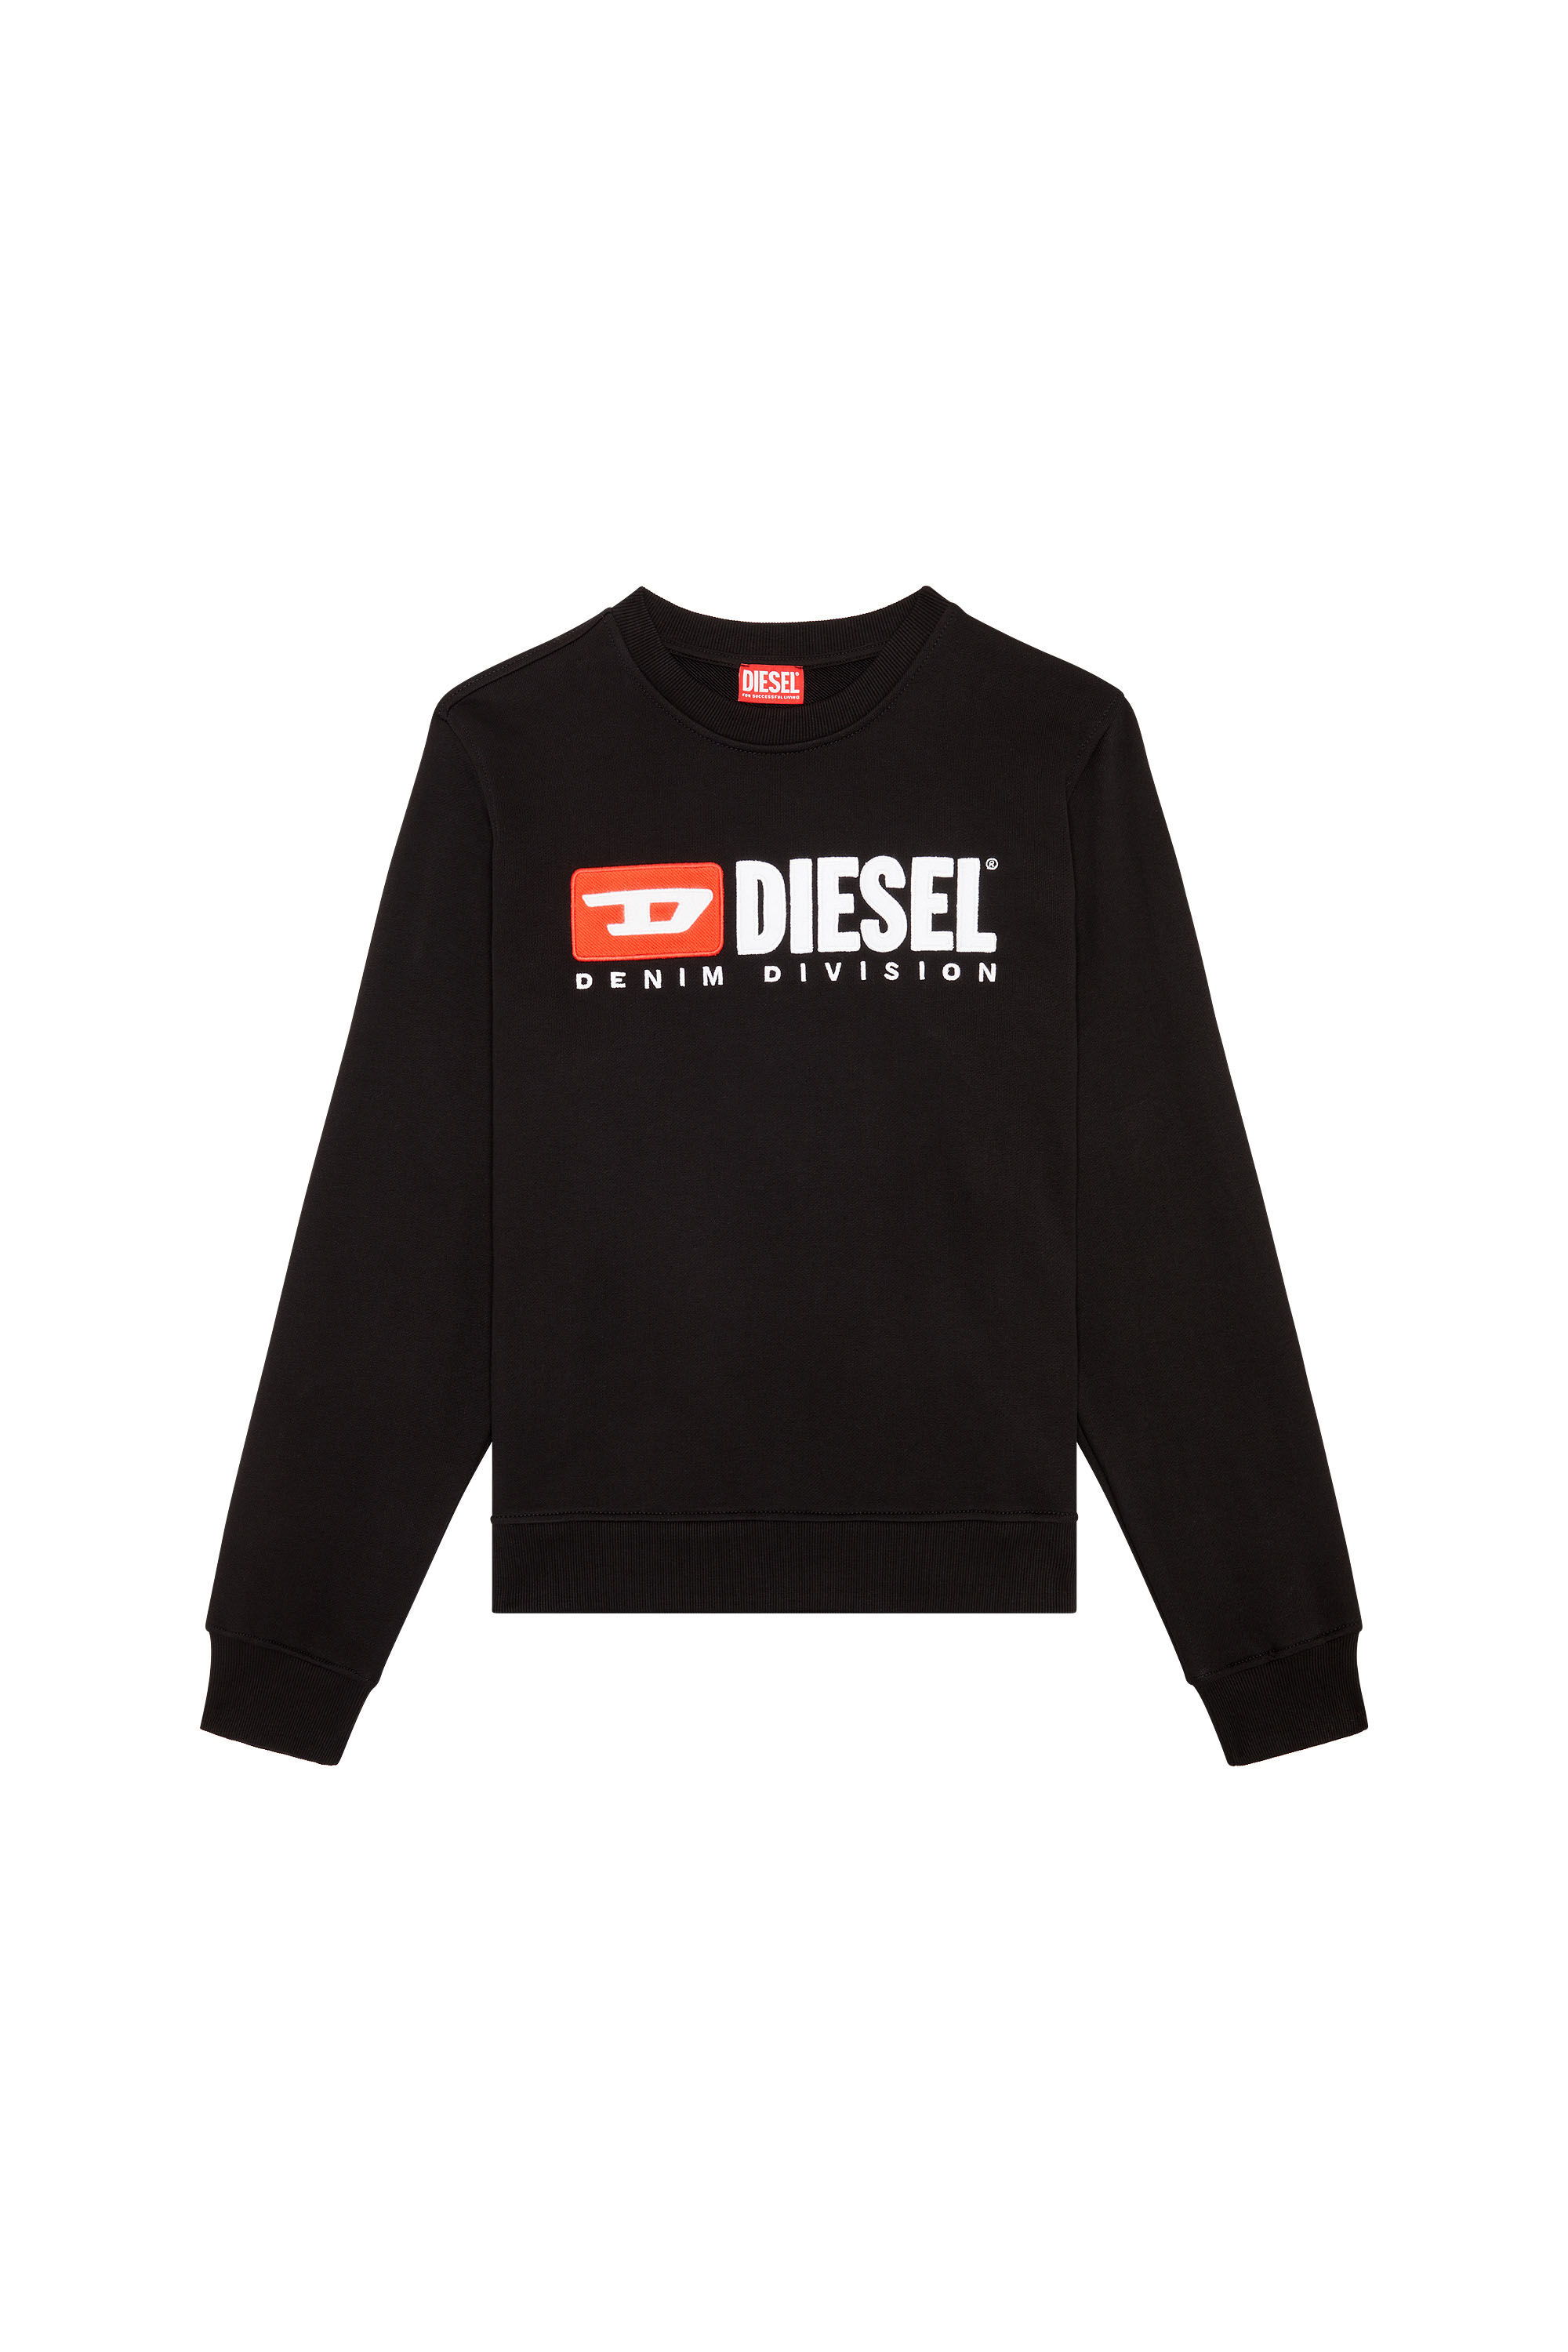 Diesel - S-GINN-DIV, Black - Image 2